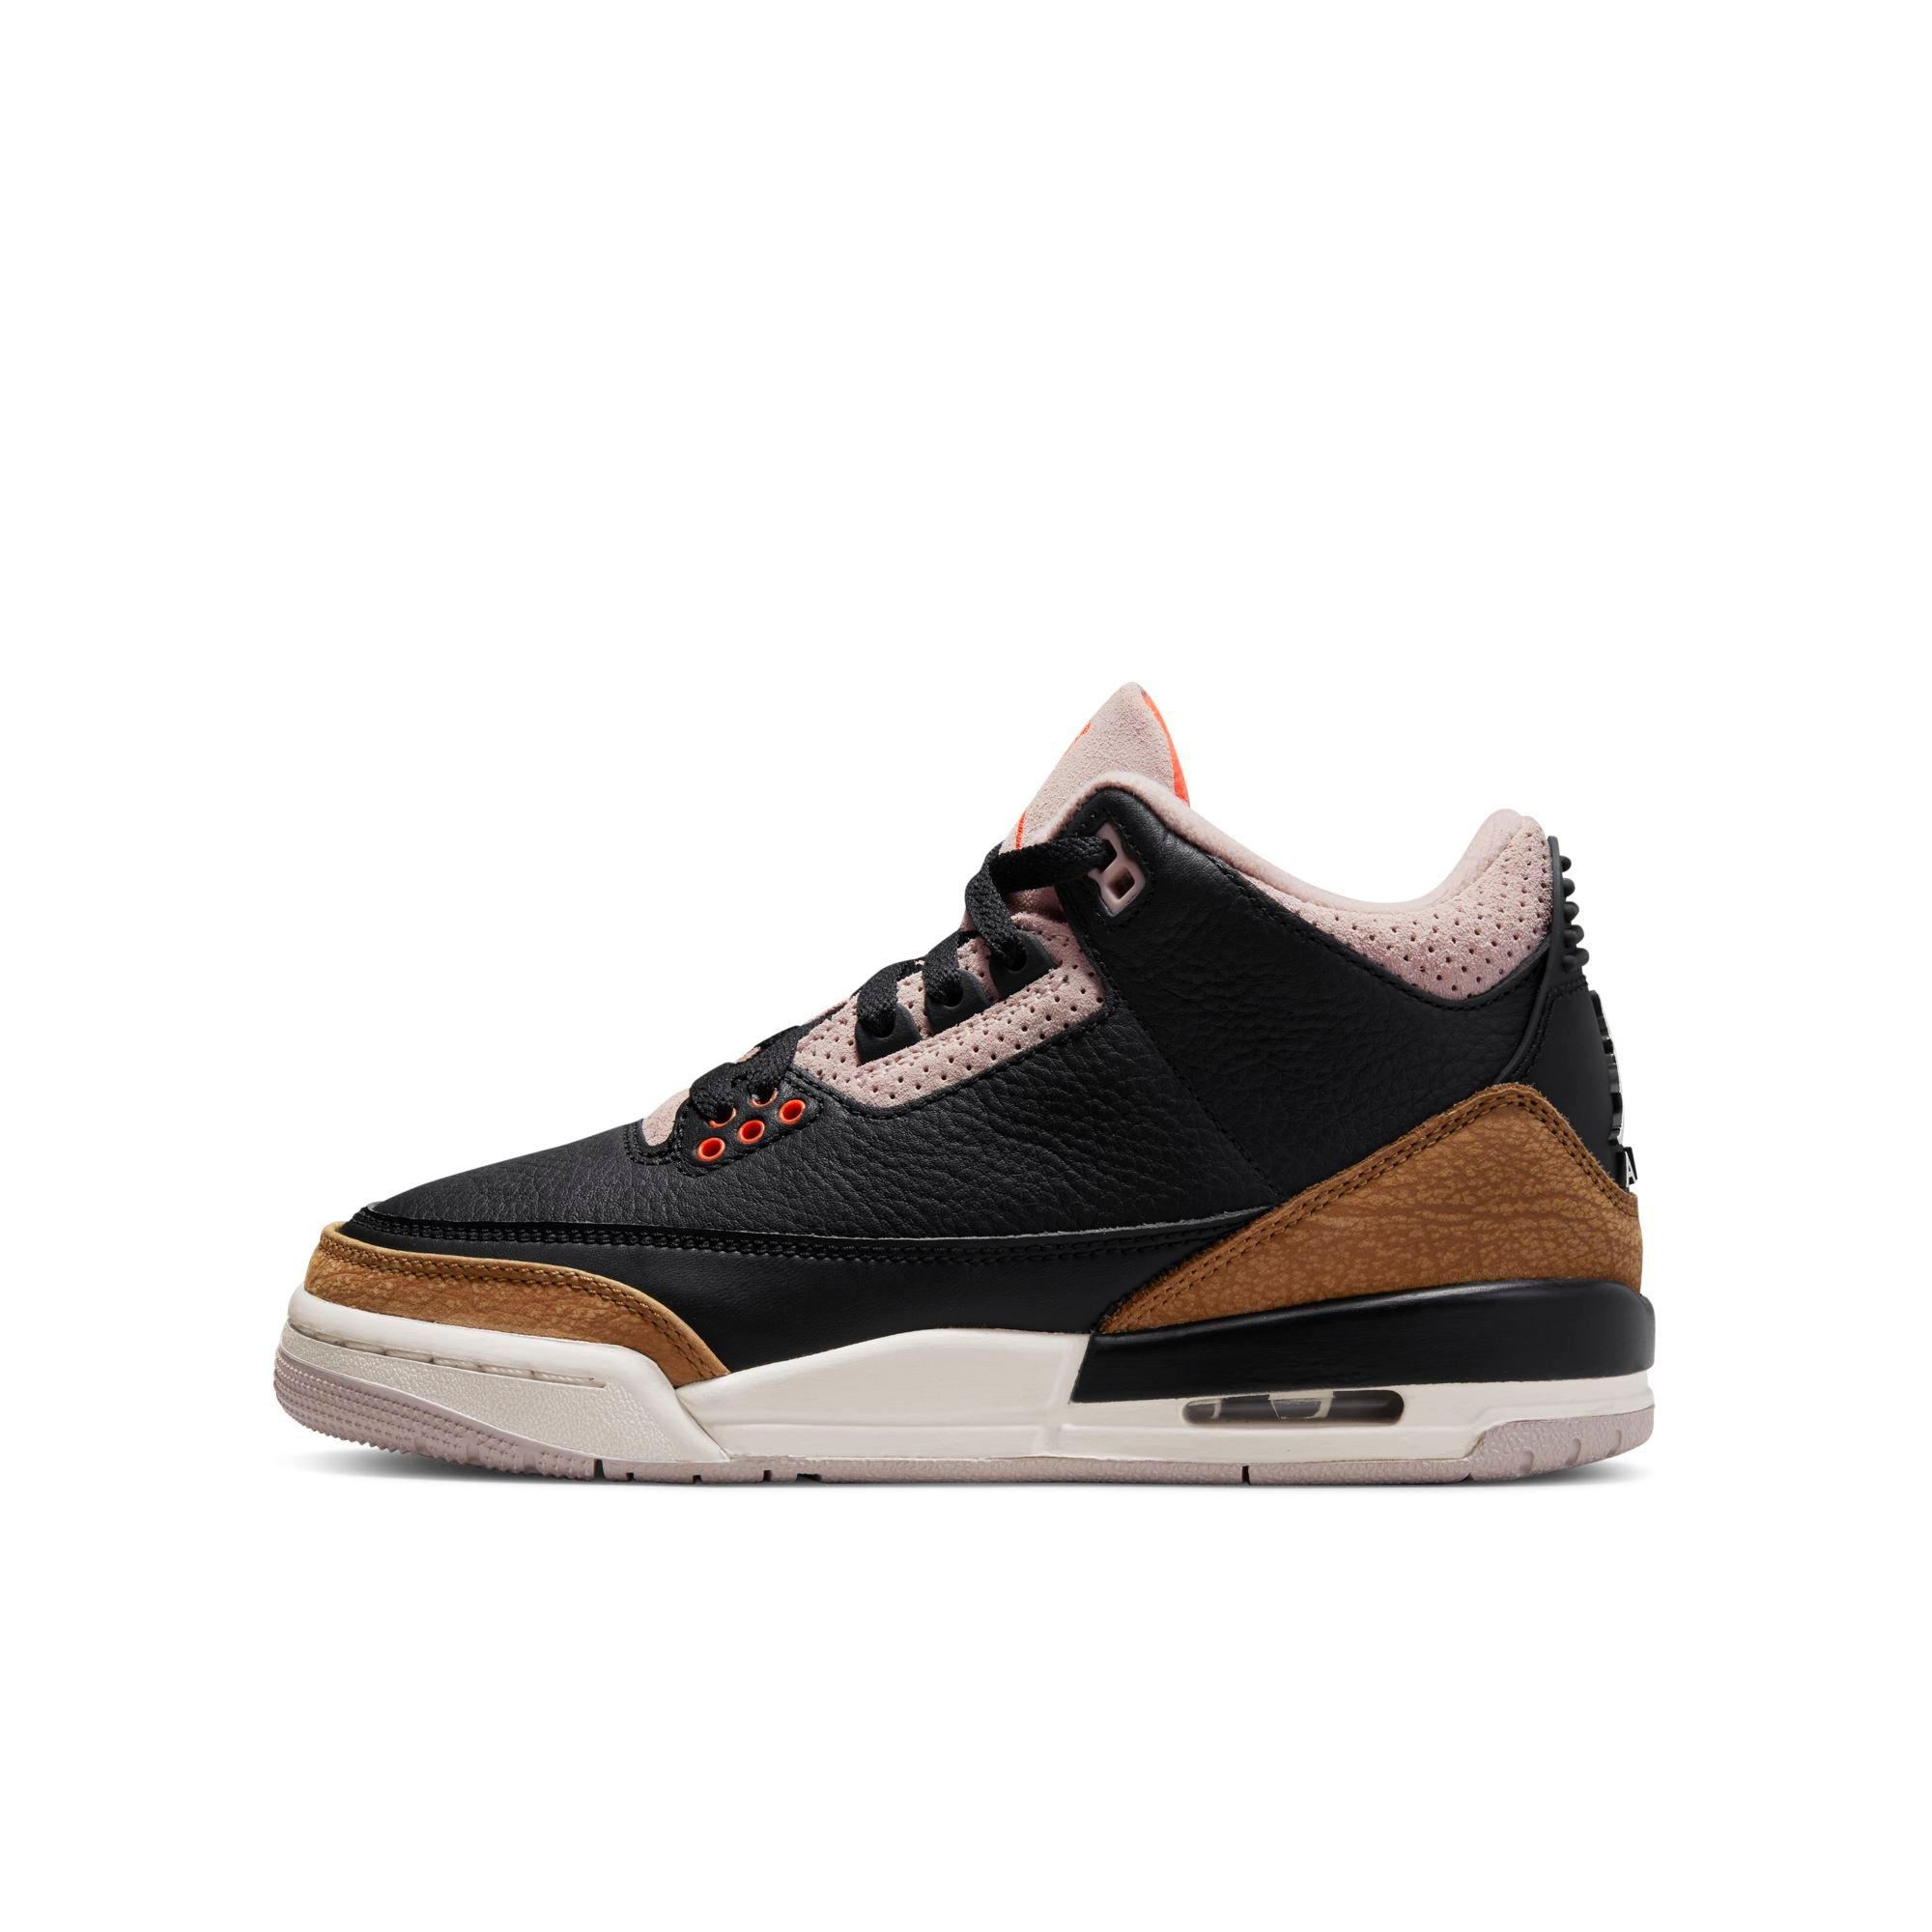 Sneakers Release – Jordan 3 Retro “Desert Cement”